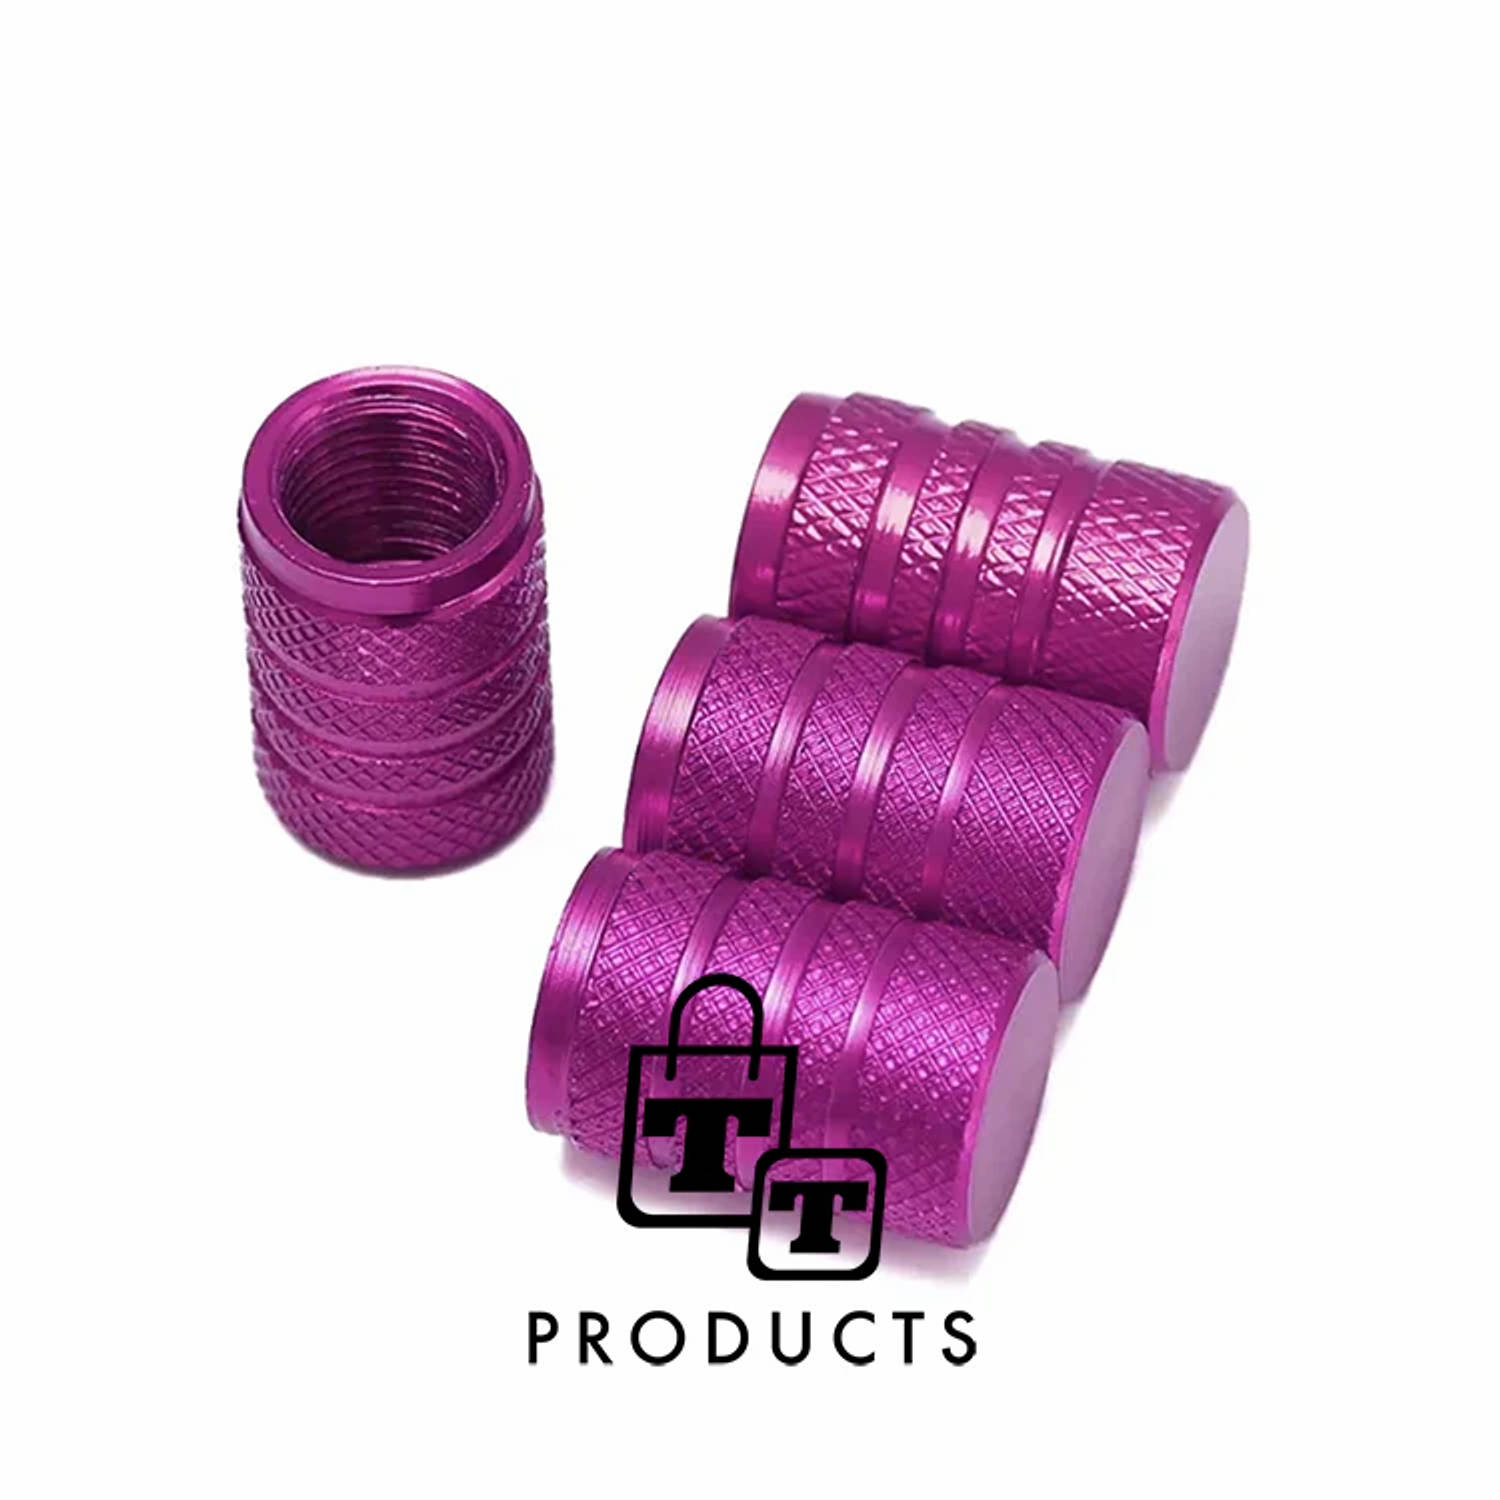 TT-products ventieldoppen 3-rings Purple aluminium 4 stuks paars auto ventieldop ventieldopjes